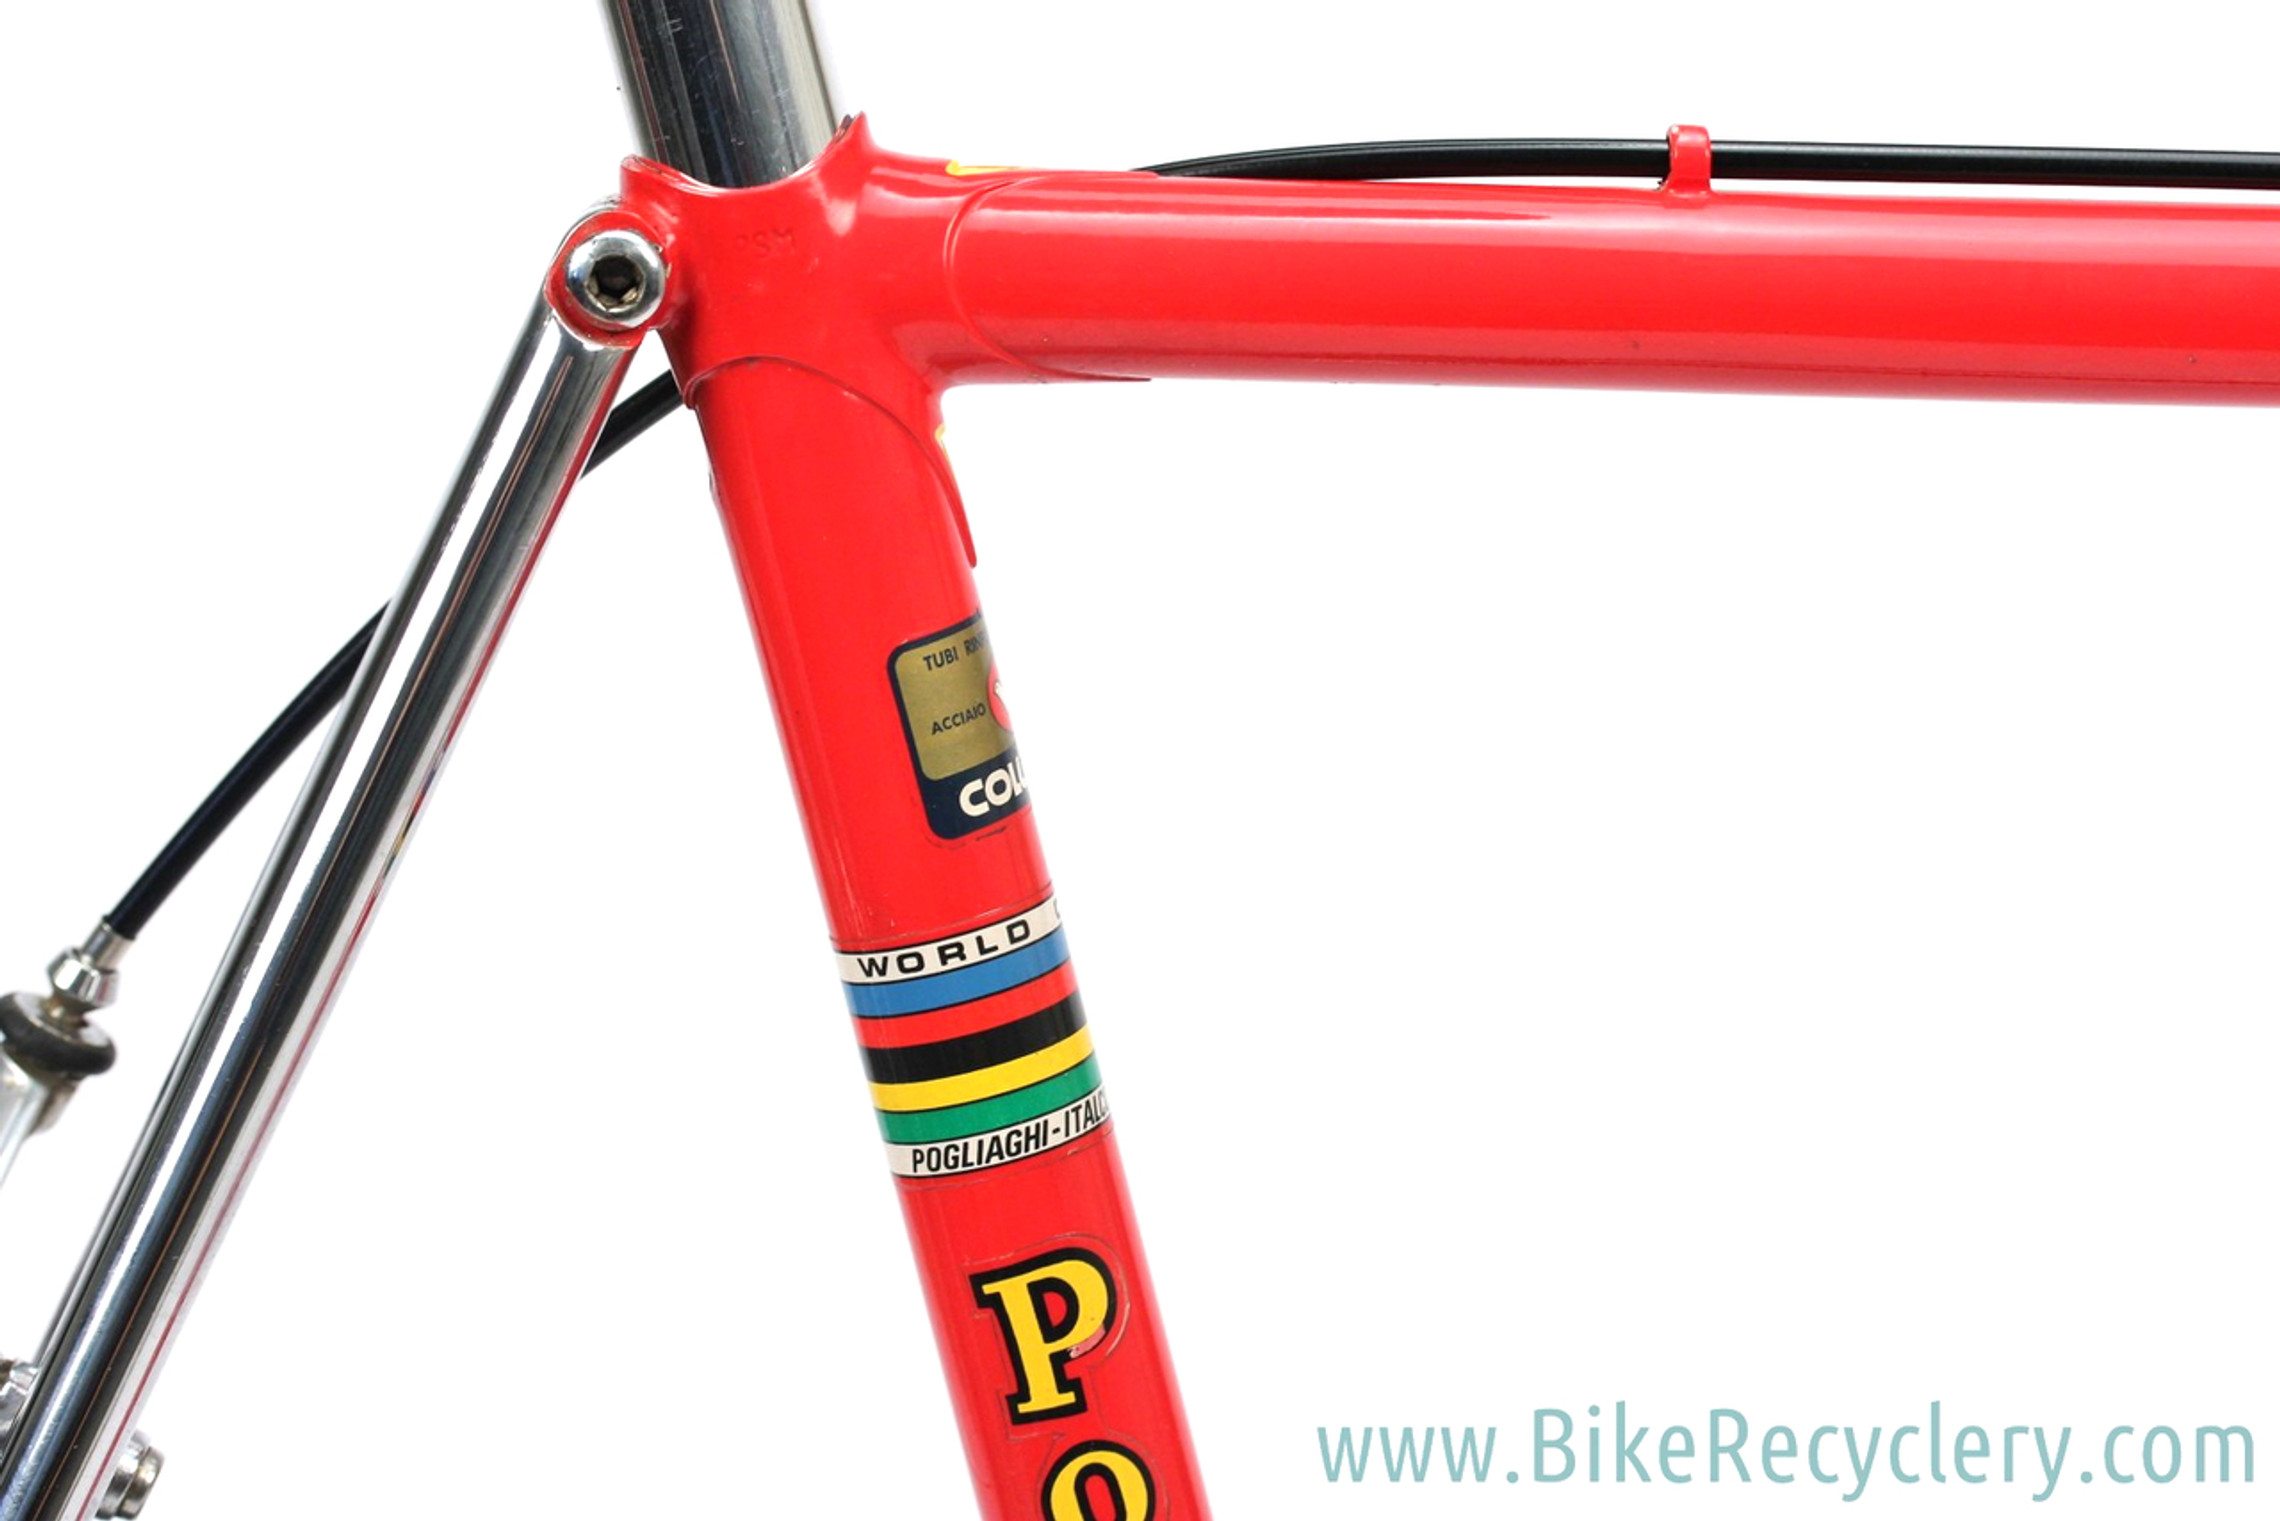 1978 Pogliaghi Italcorse Road Bike: ORIGINAL PAINT - 56cm - Campagnolo Nuovo Record - Fully Chromed Stays/Fork  (Original Show Bike Condition)